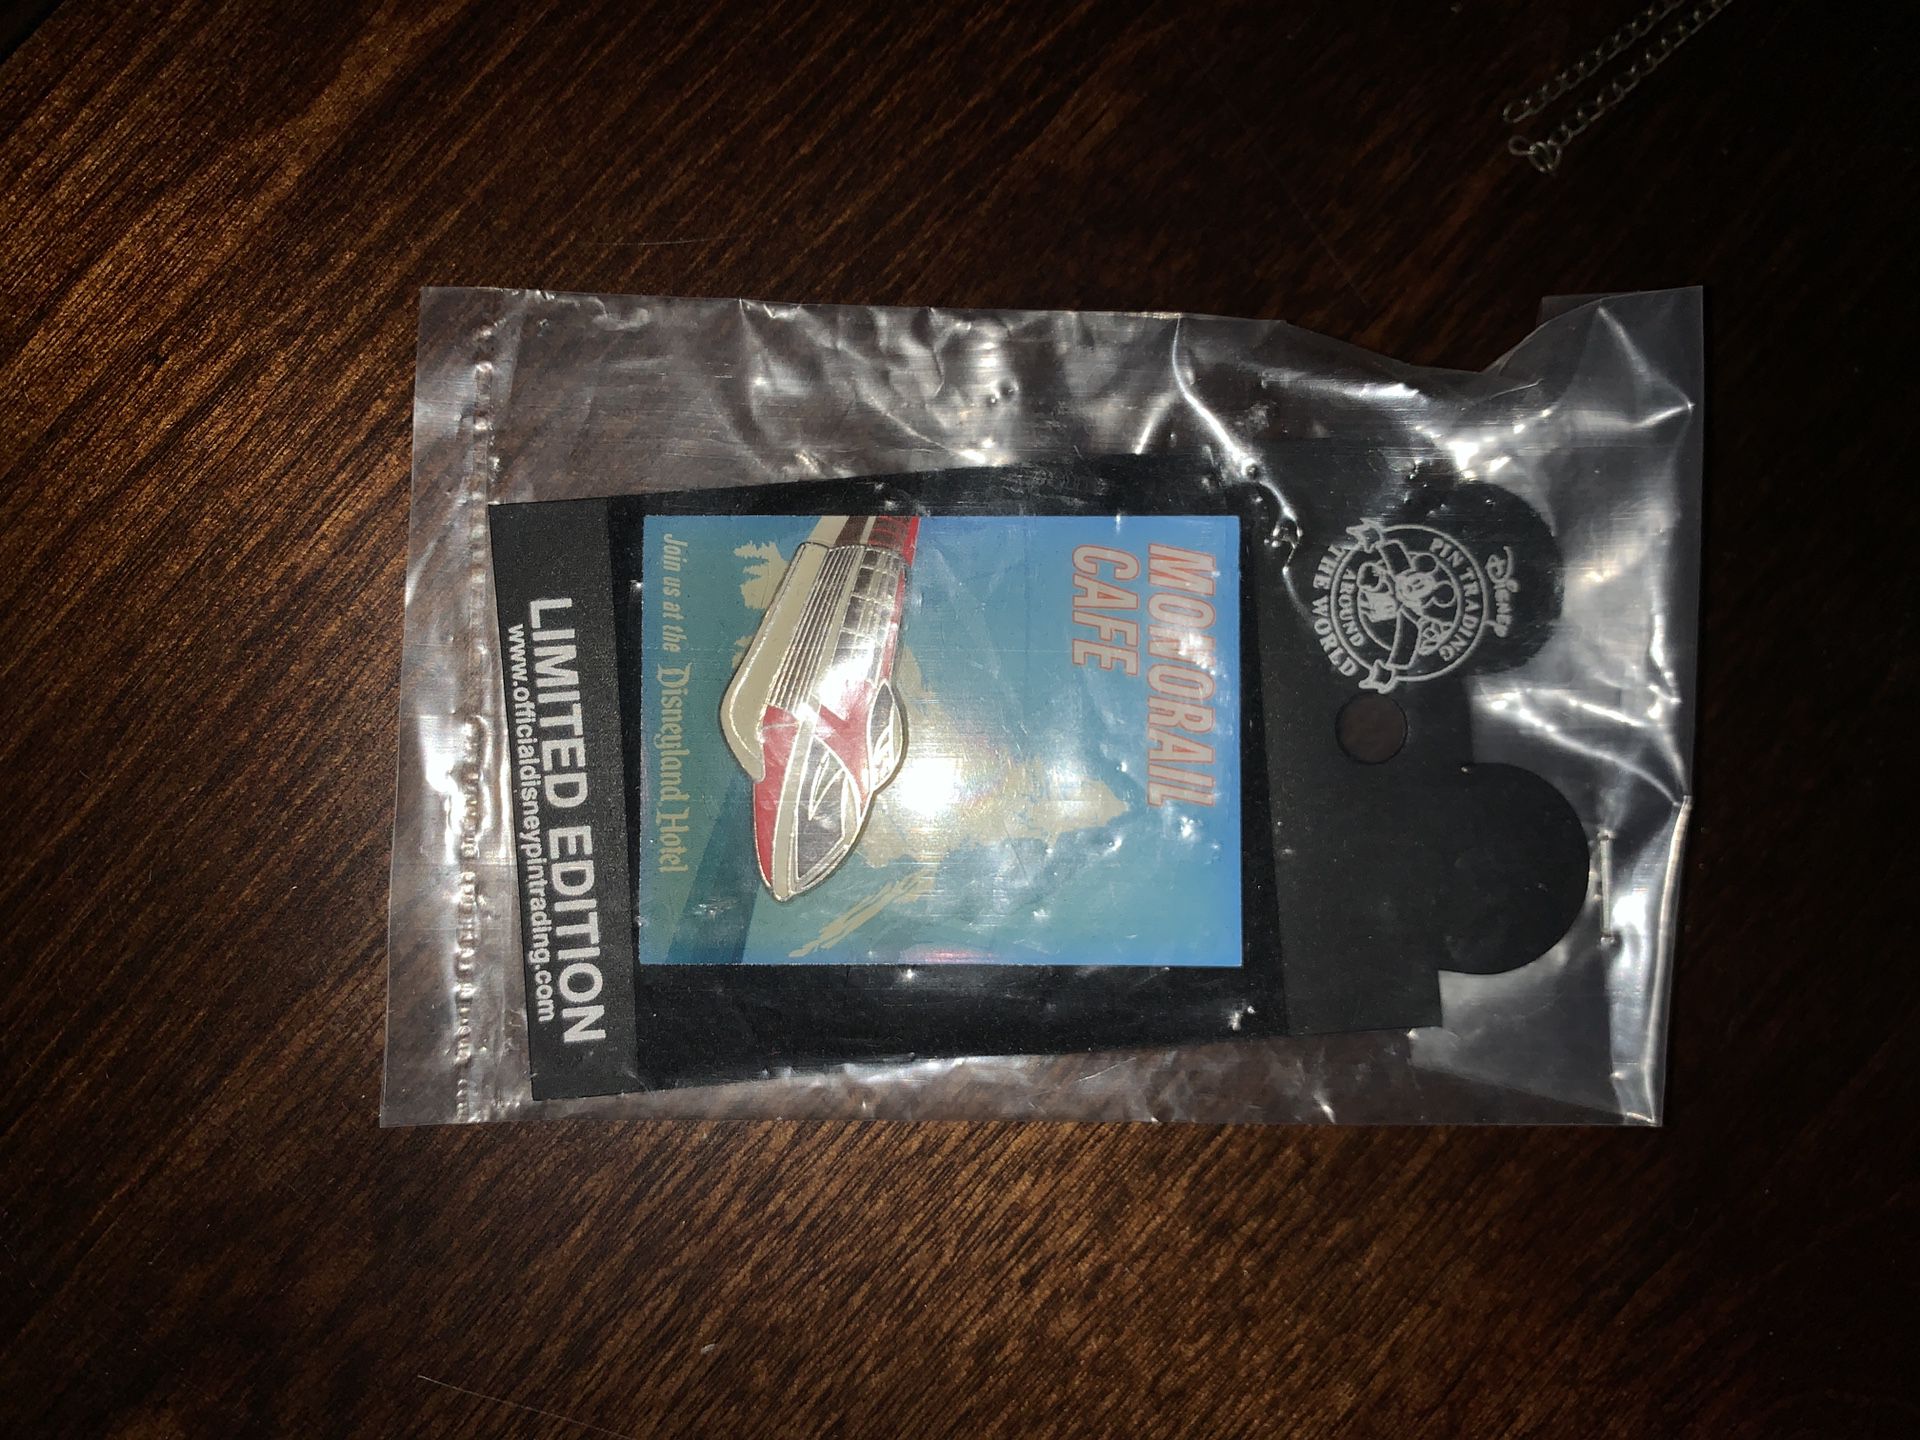 Disney collectors pin— new sealed in original case